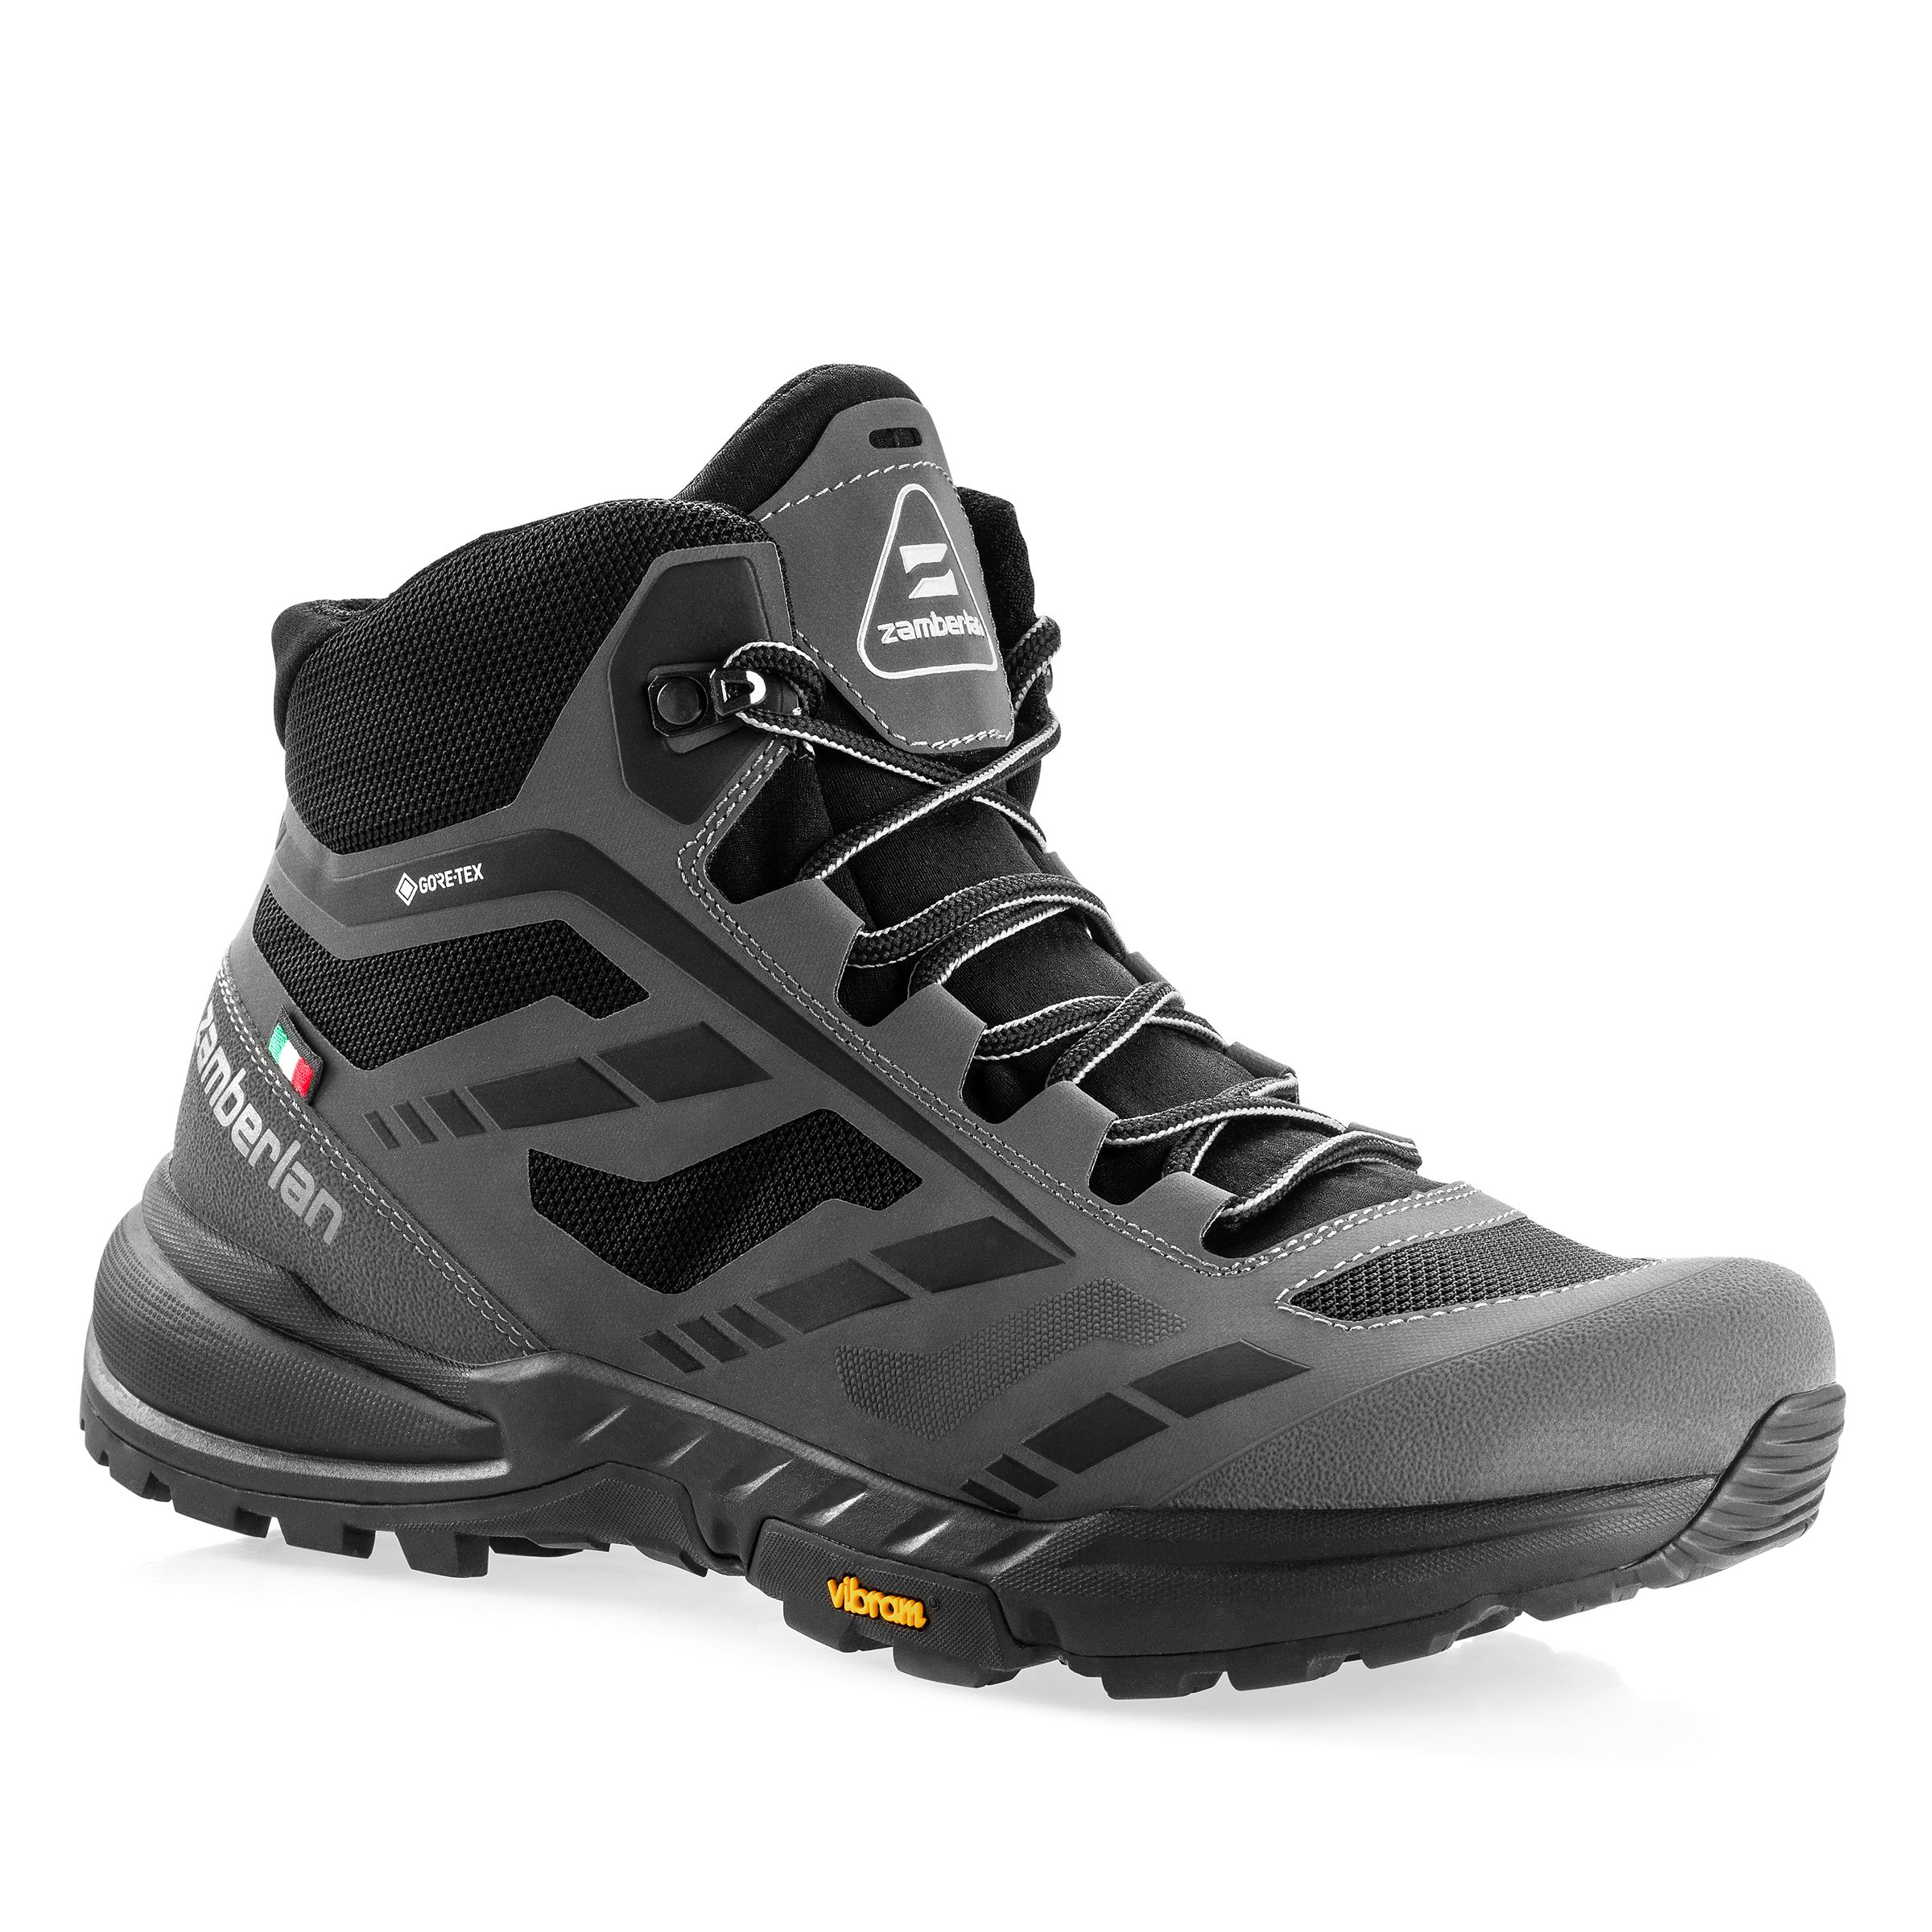 Zamberlan 219 Anabasis GTX Waterproof Mid Hiking Boots for Men - Grey - 8.5M